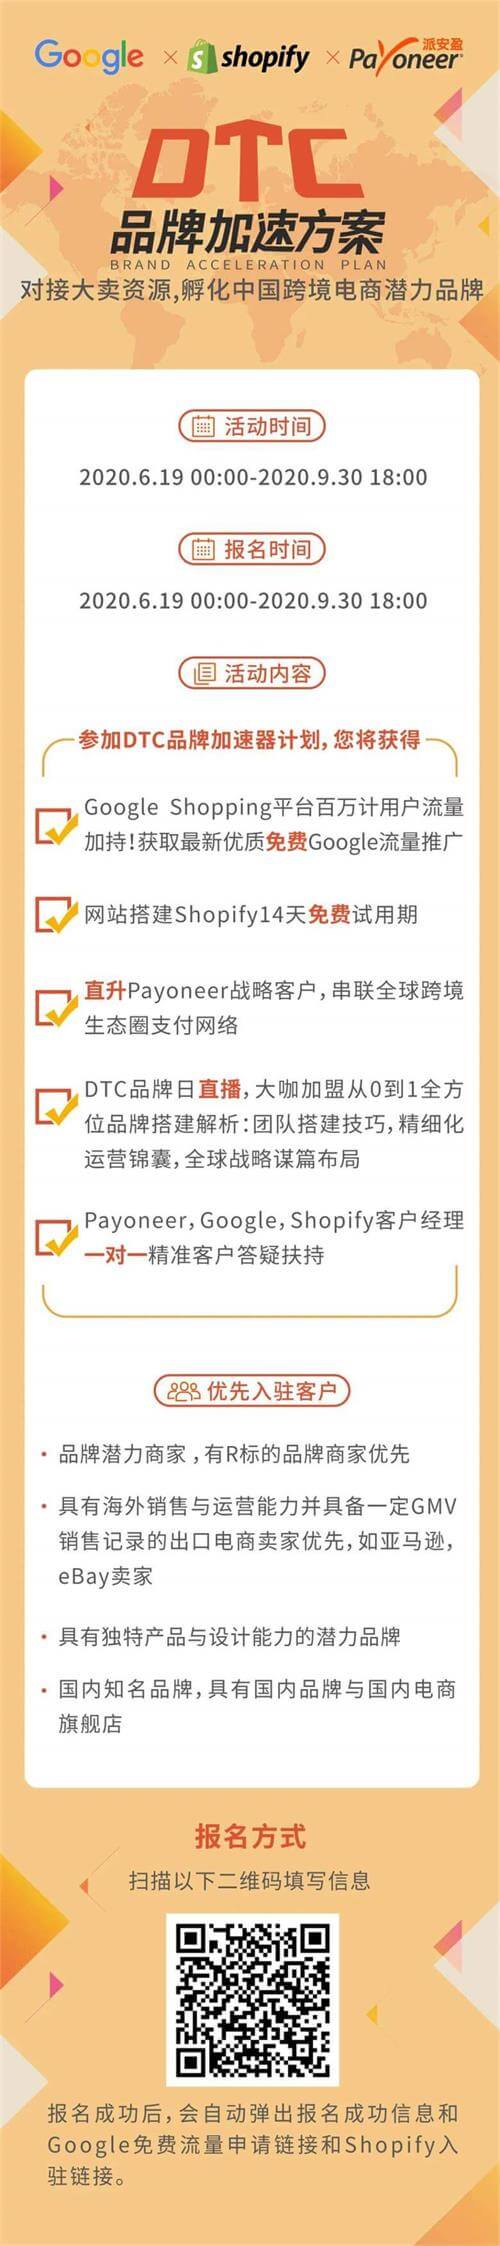 Payoneer联手Google、Shopify共推“DTC品牌加速计划”